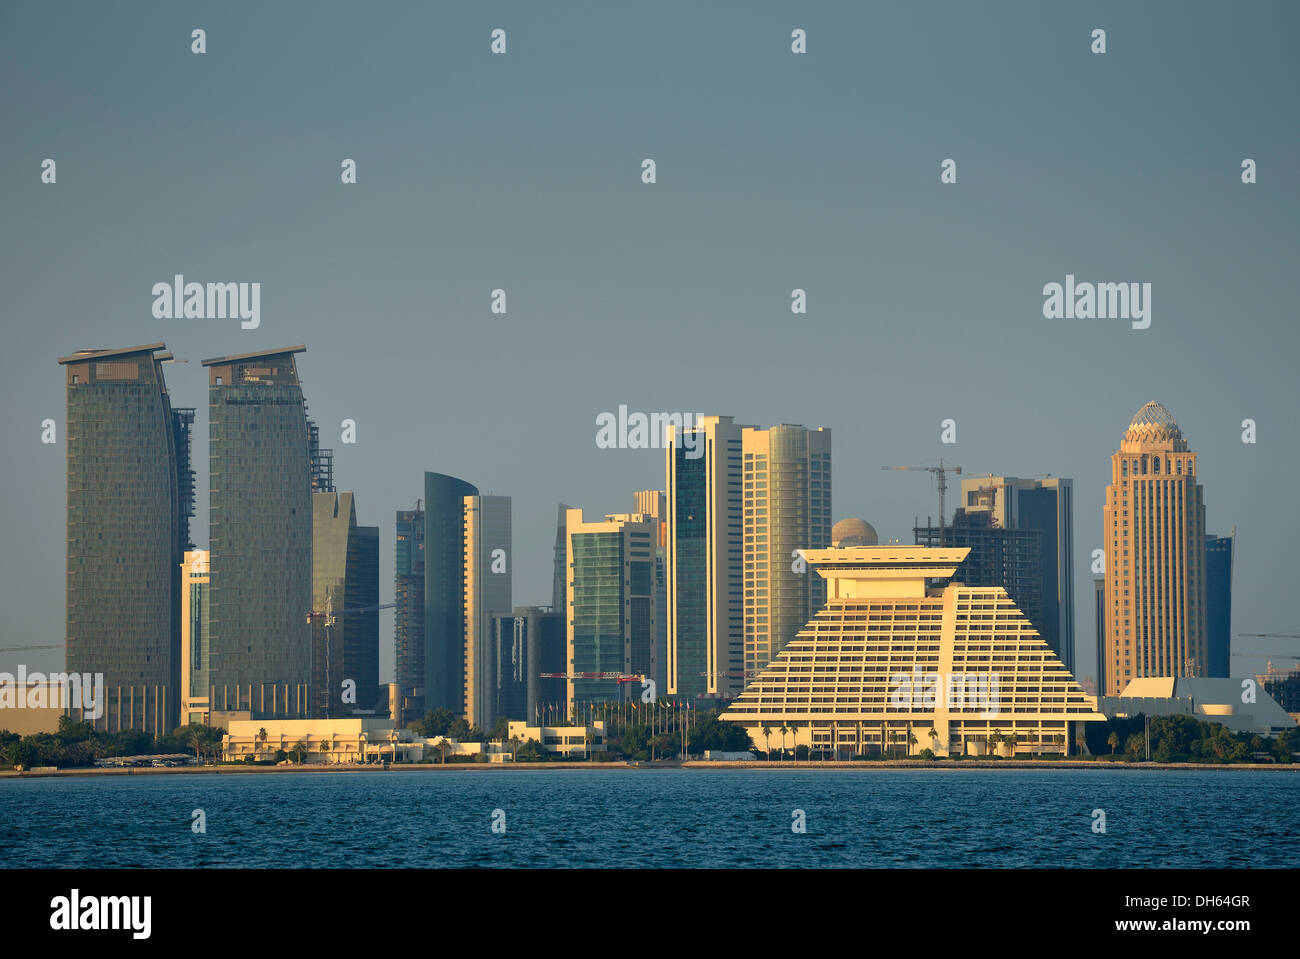 Skyline of Doha with Al Fardan Residences Tower, Doha Bank Tower, Sheraton Doha Hotel, Four Seasons Hotel, in the evening light Stock Photo